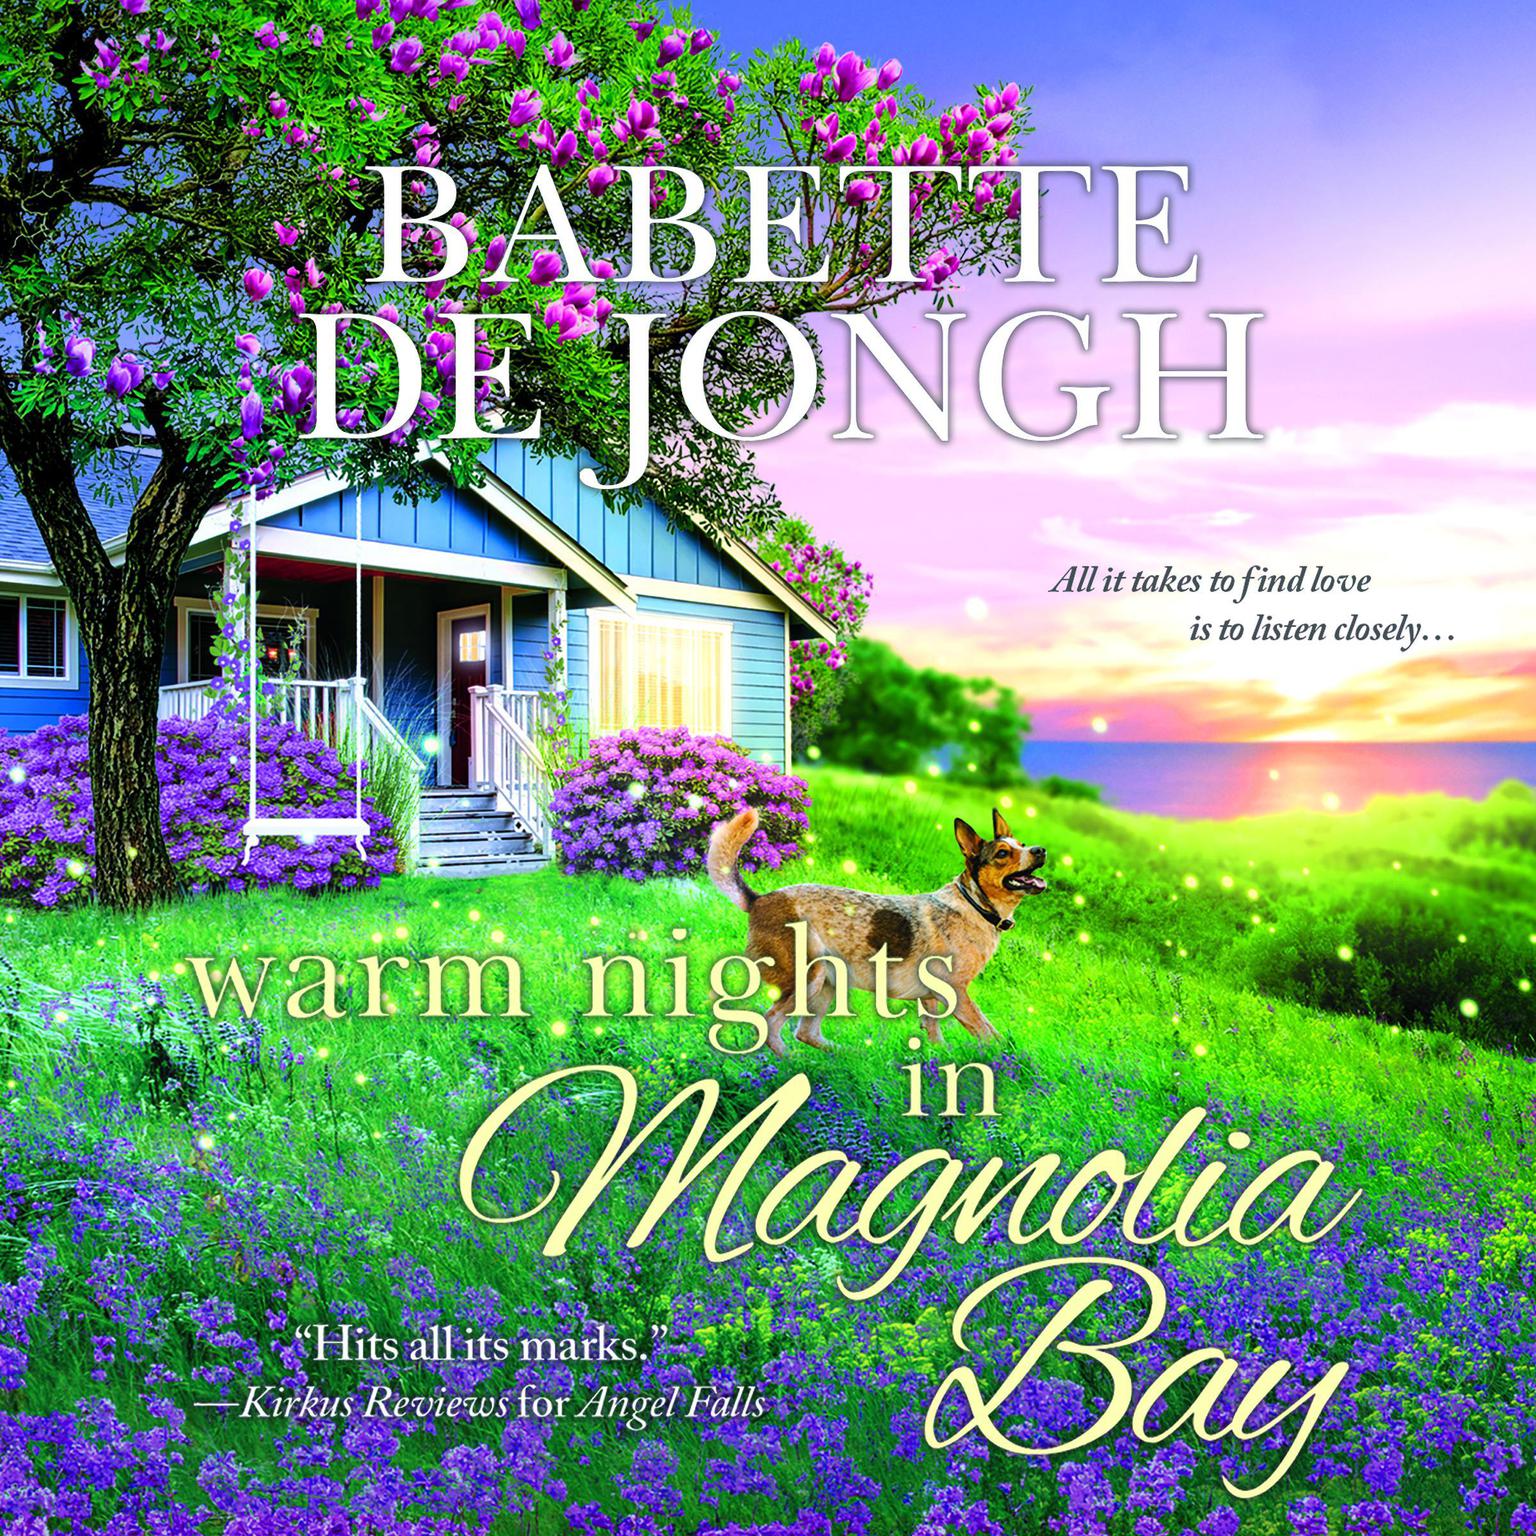 Warm Nights in Magnolia Bay Audiobook, by Babette de Jongh